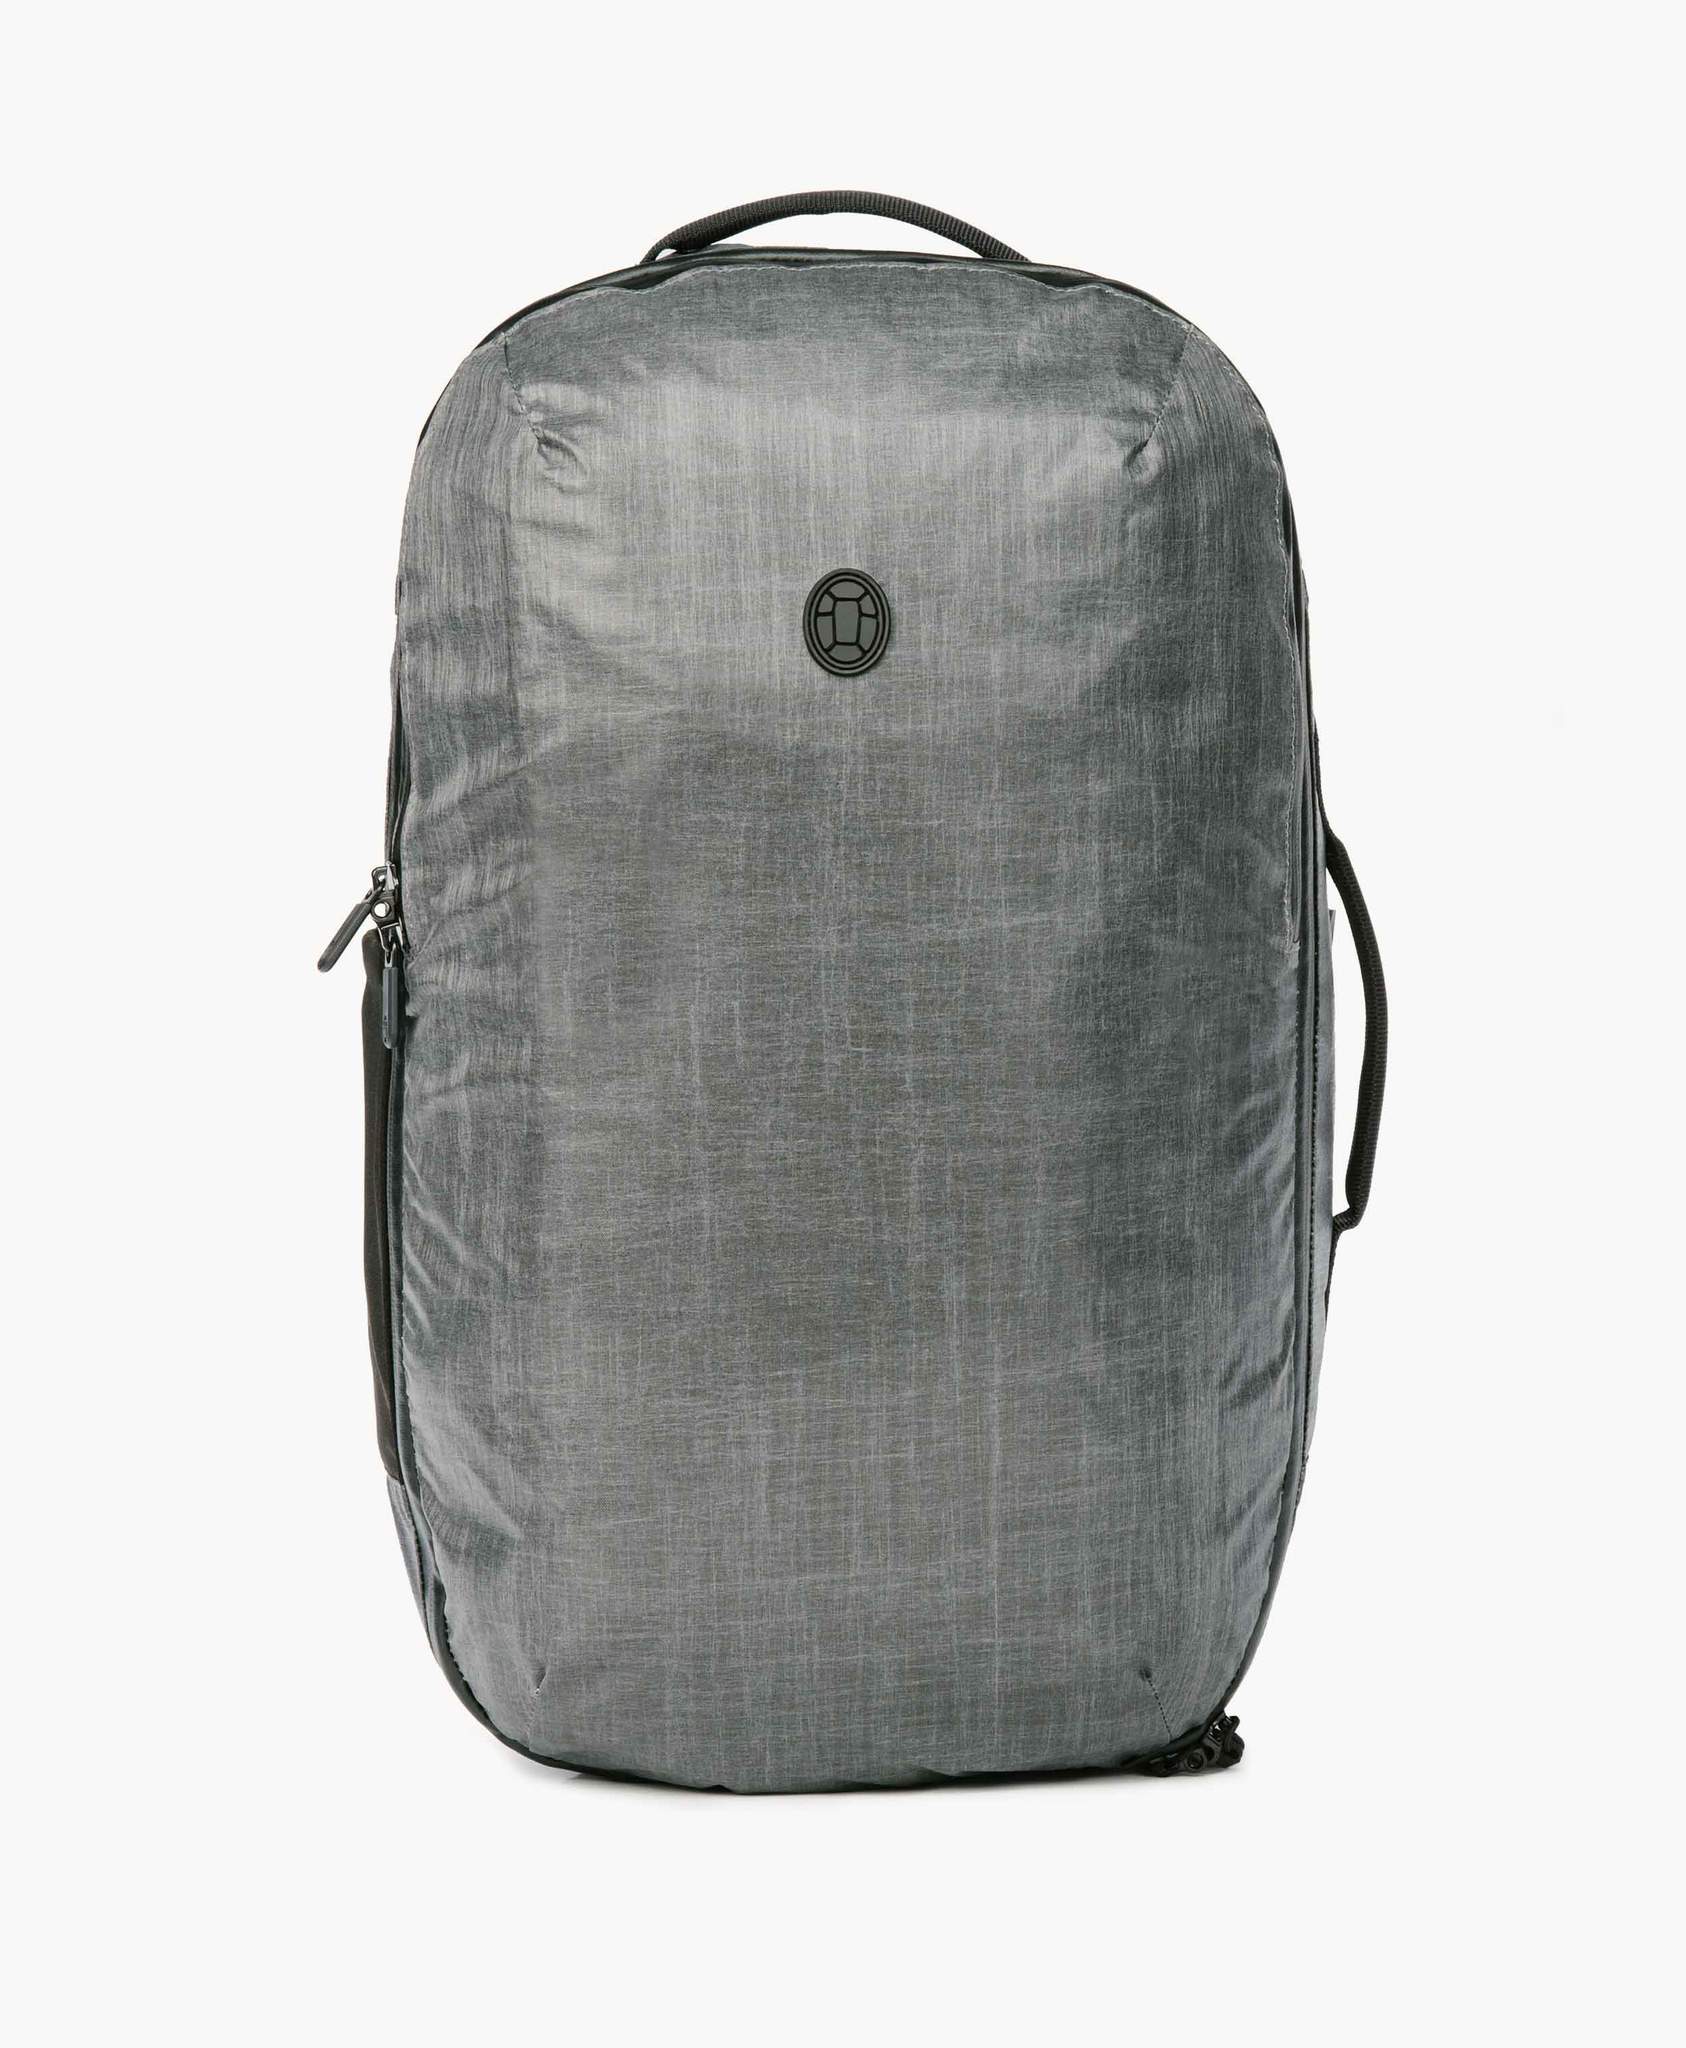 Best Minimalist Backpack